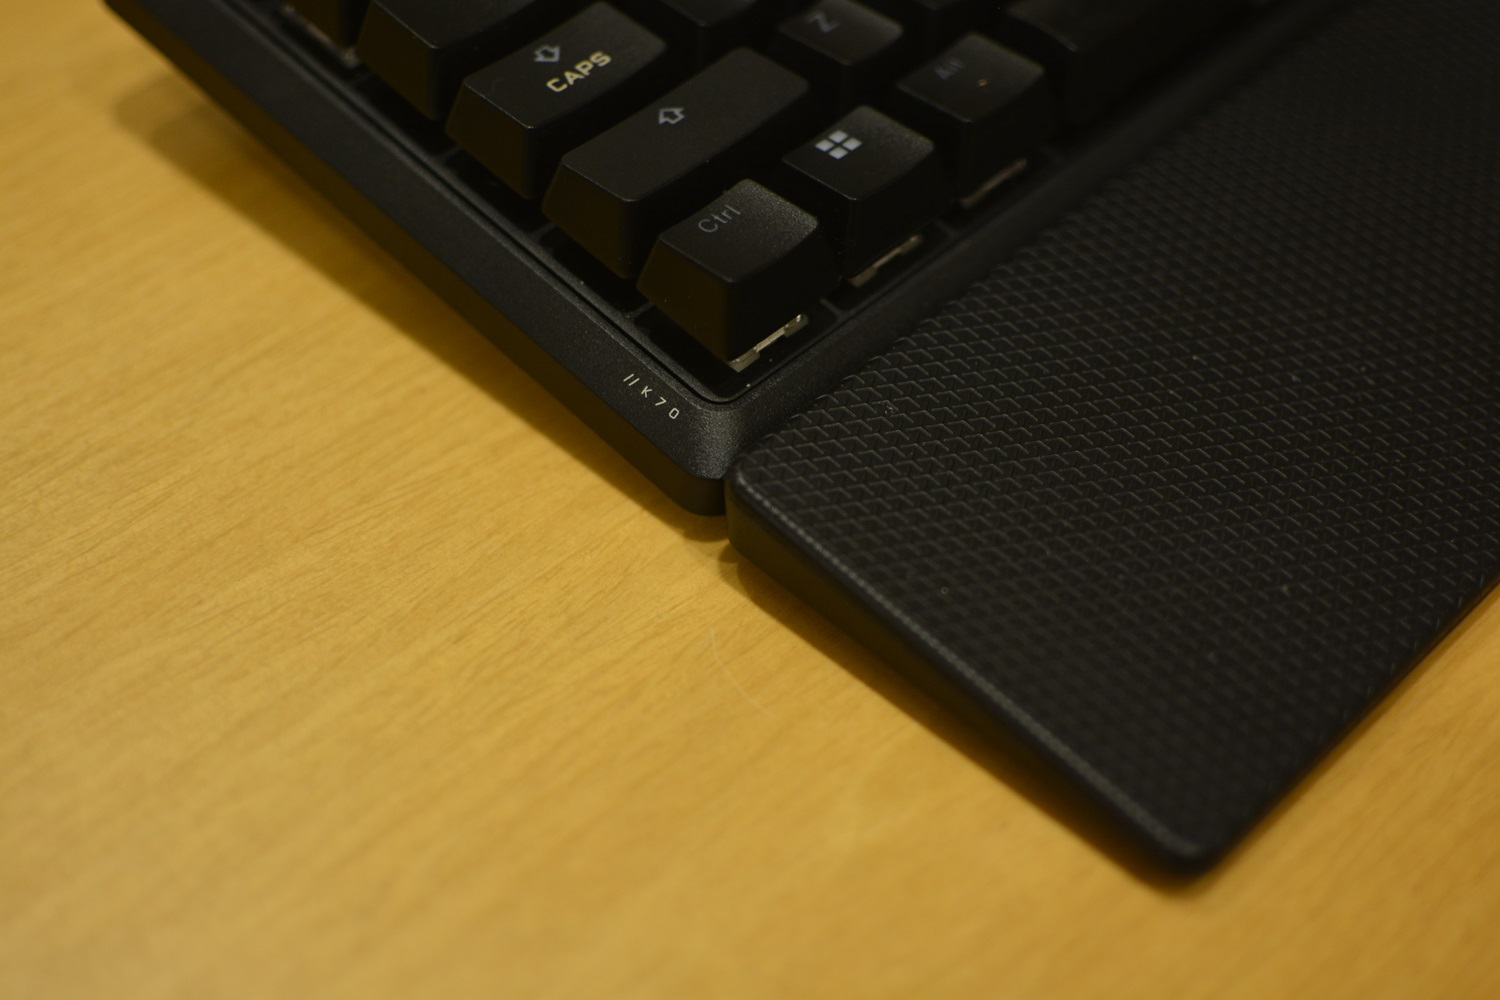 Wrist rest on the Corsair K70 Core keyboard.